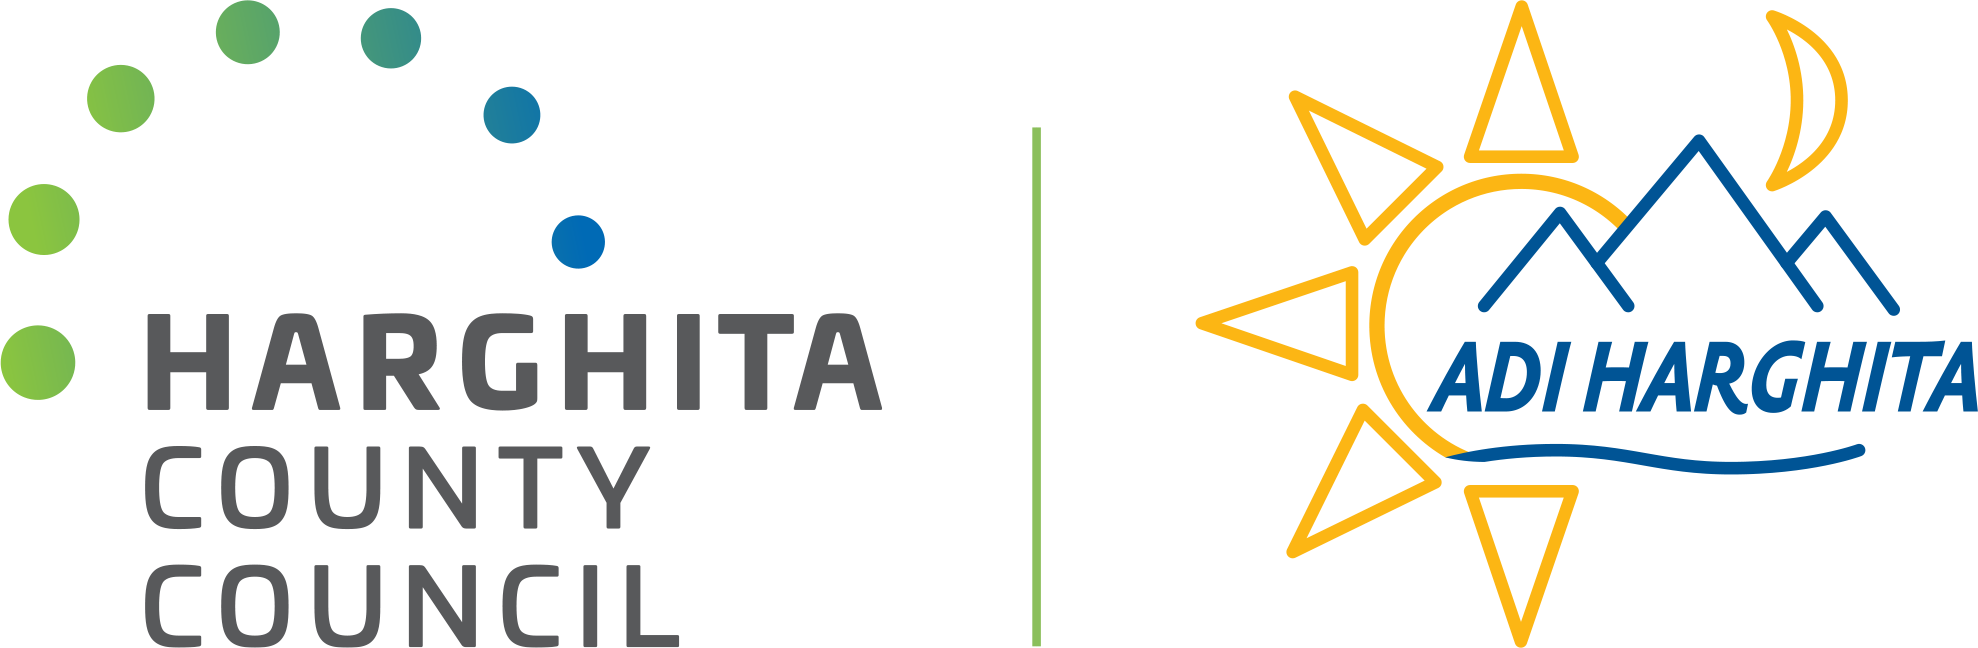 Logo ADI Harghita